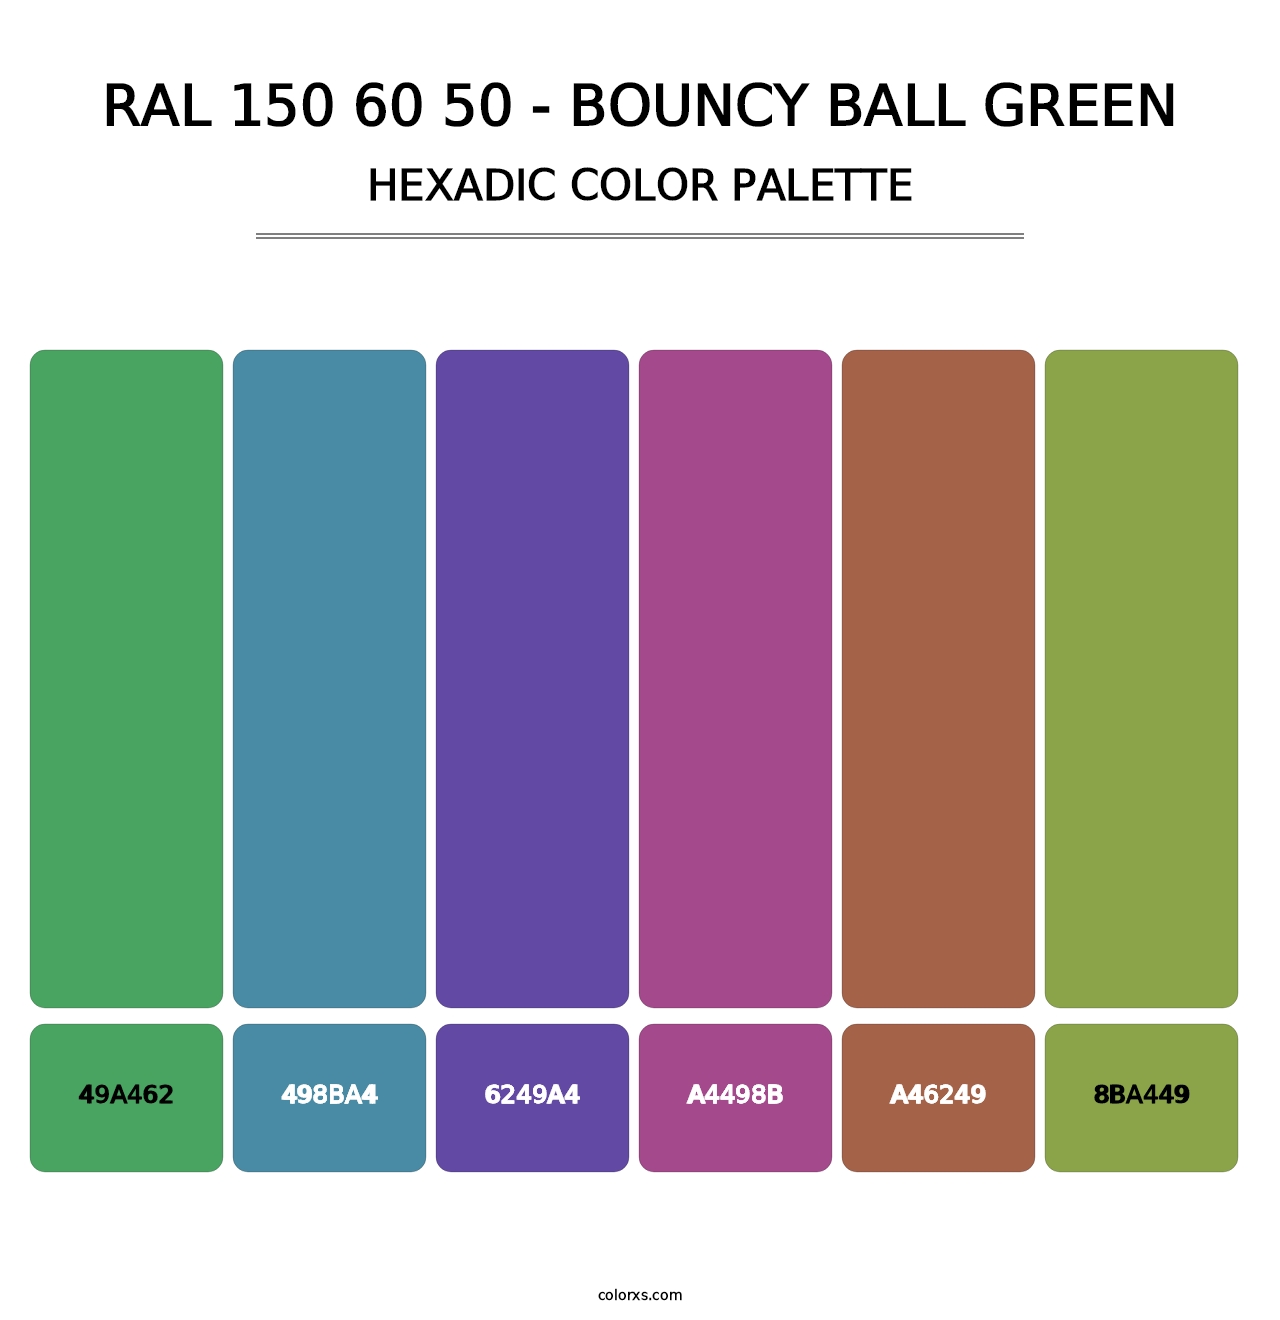 RAL 150 60 50 - Bouncy Ball Green - Hexadic Color Palette